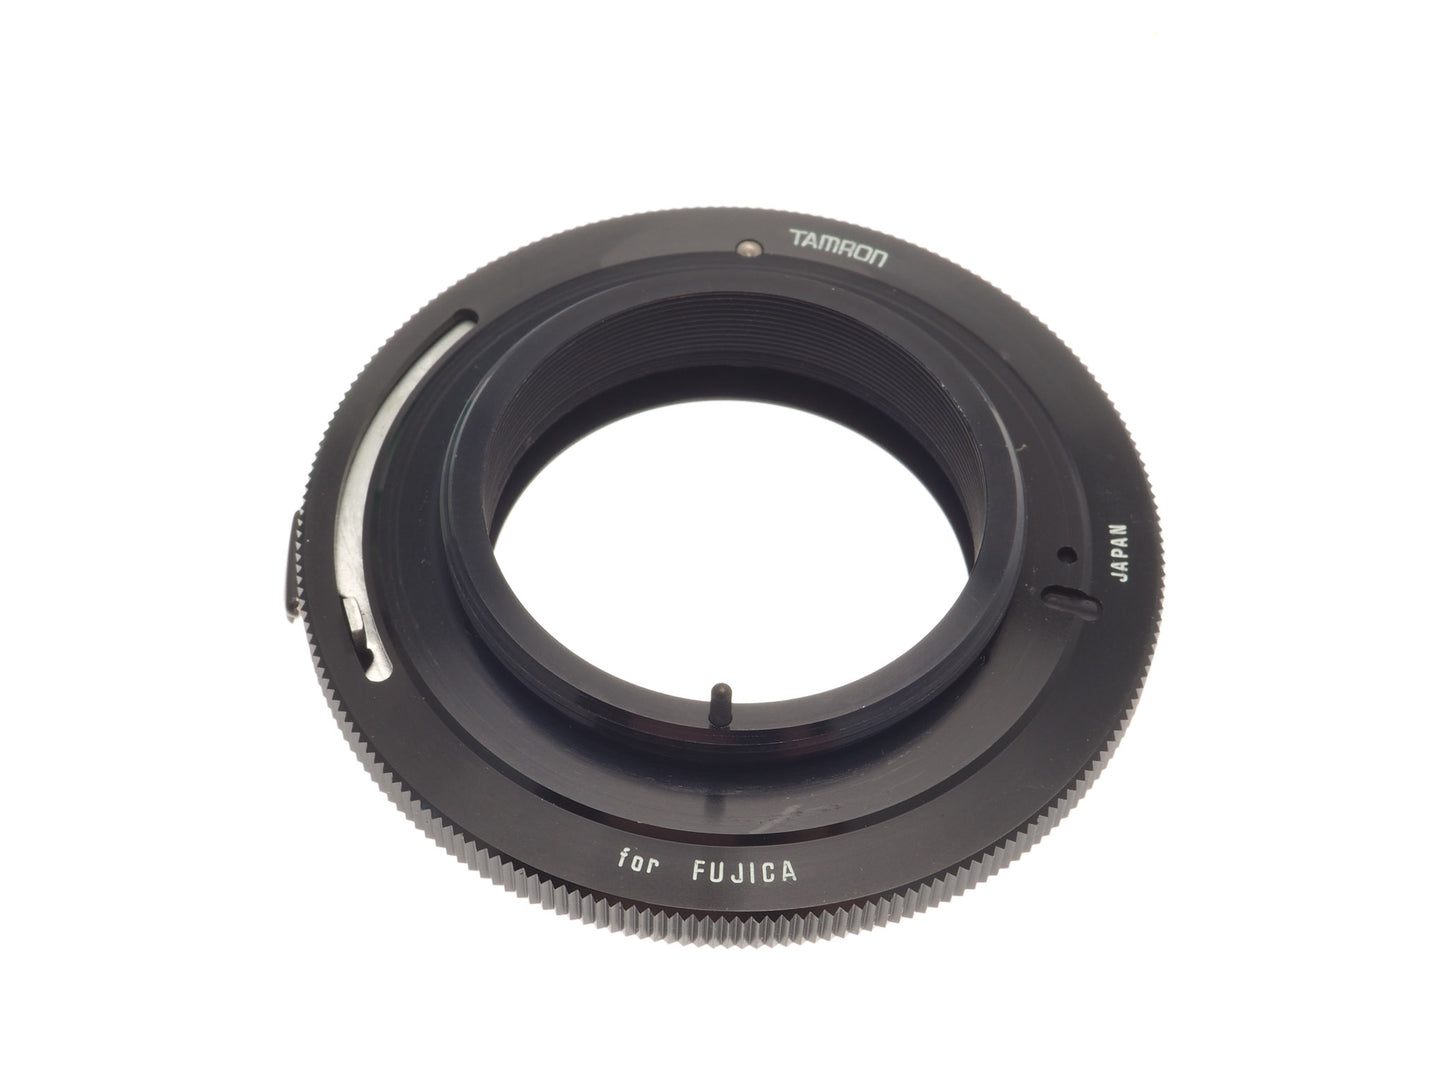 Tamron Adaptall - Fujica (M42) - Lens Adapter